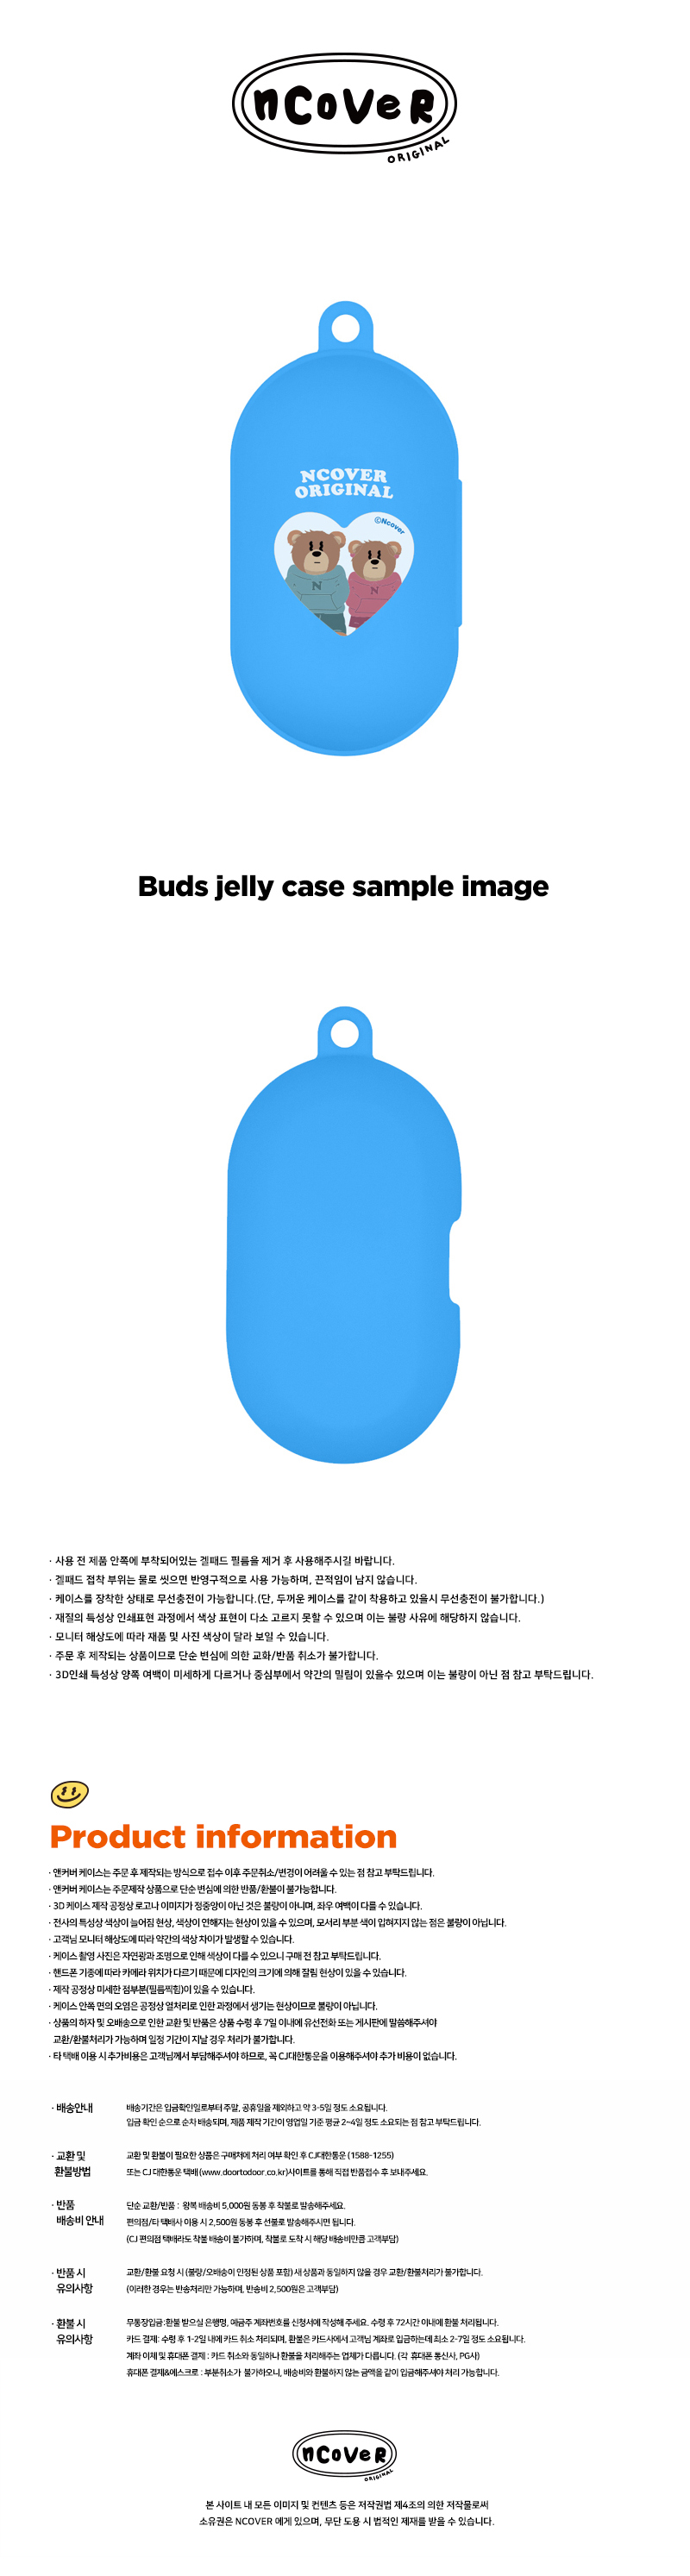  Couple hoodie bruin-blue(buds jelly)  15,000원 - 바이인터내셔널주식회사 디지털, 이어폰/헤드폰, 이어폰/헤드폰 액세서리, 에어팟/에어팟프로 케이스 바보사랑  Couple hoodie bruin-blue(buds jelly)  15,000원 - 바이인터내셔널주식회사 디지털, 이어폰/헤드폰, 이어폰/헤드폰 액세서리, 에어팟/에어팟프로 케이스 바보사랑